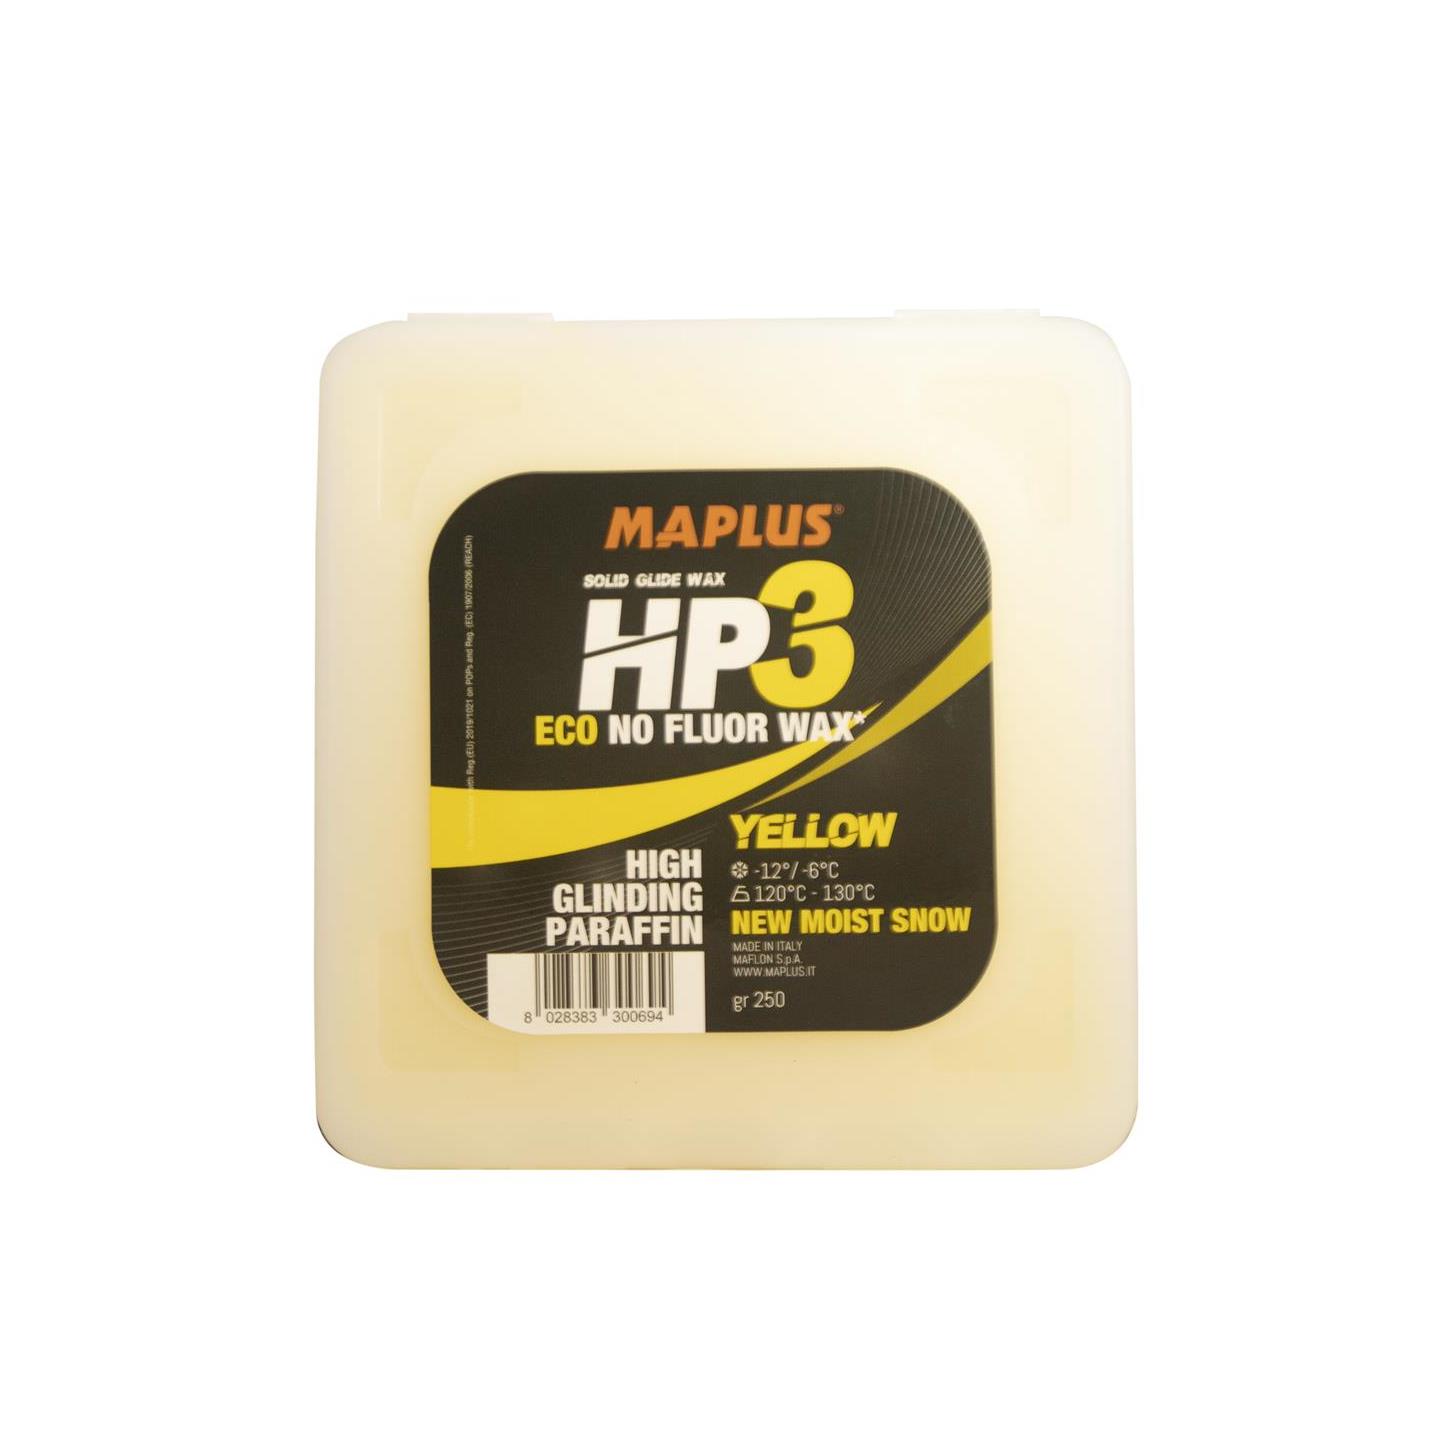 Maplus HP3 Yellow Eco No Fluor 0 til -6 250g